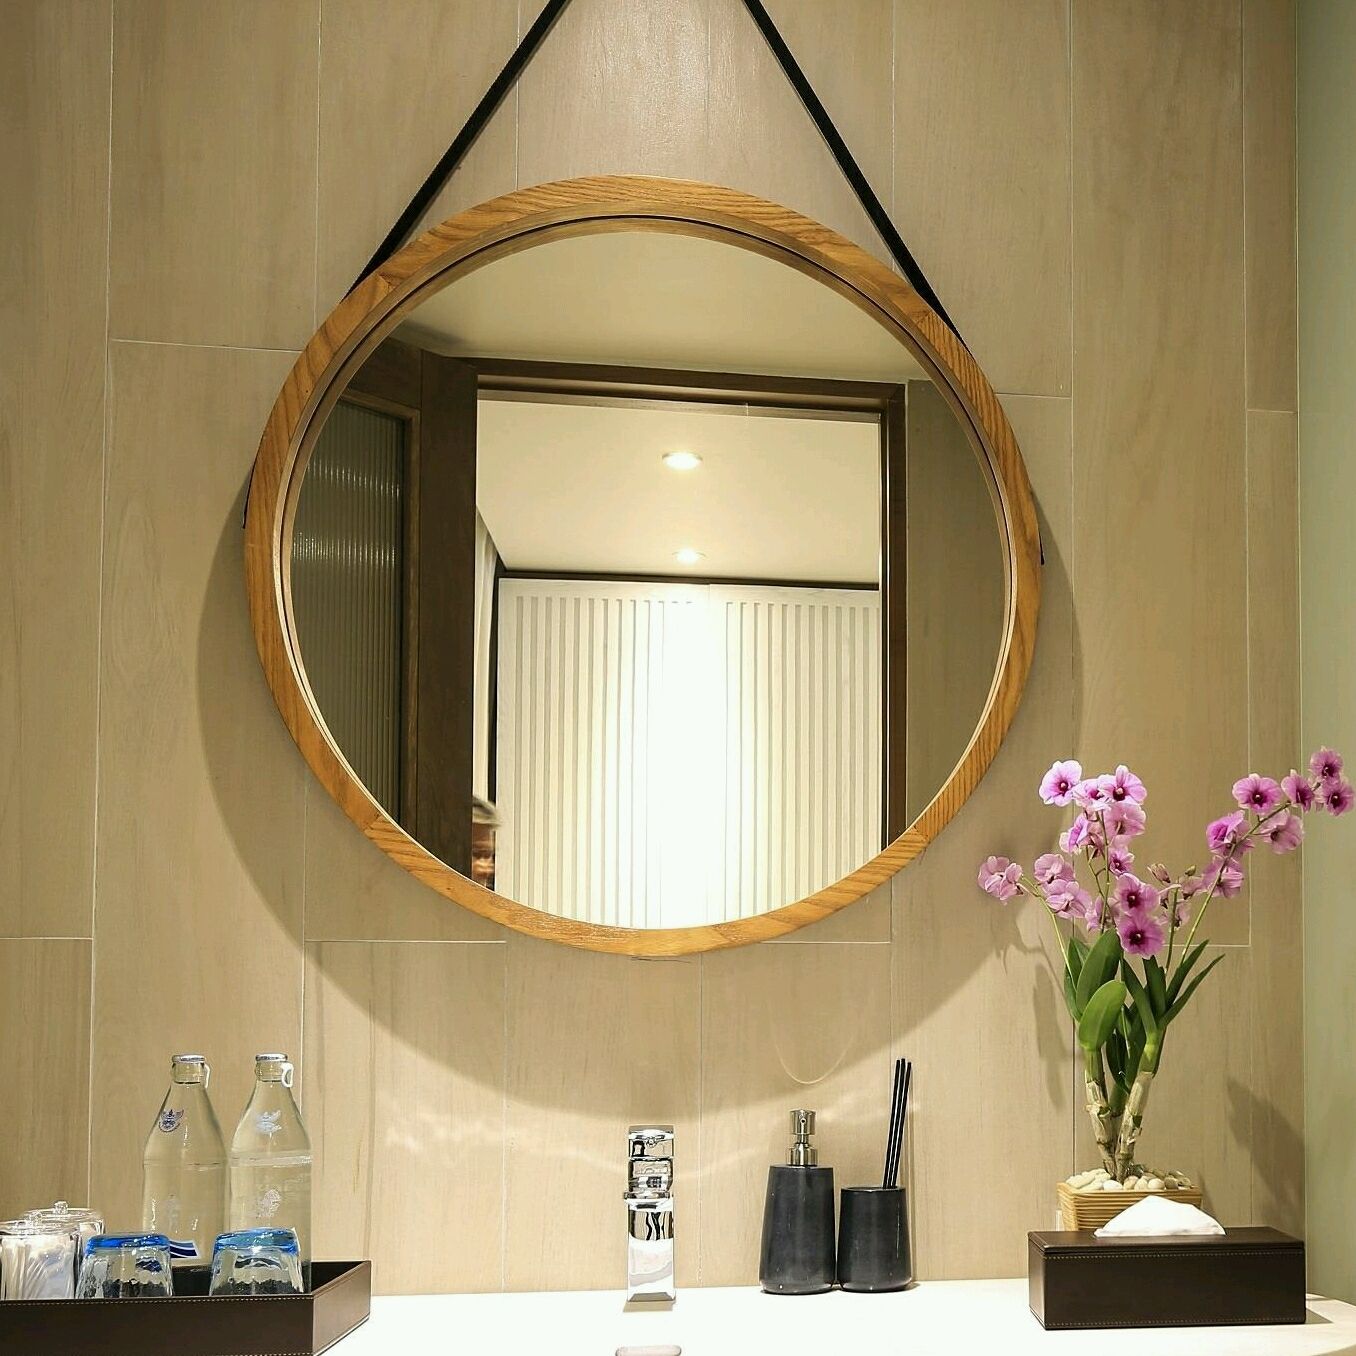 зеркало в раме в ванной фото